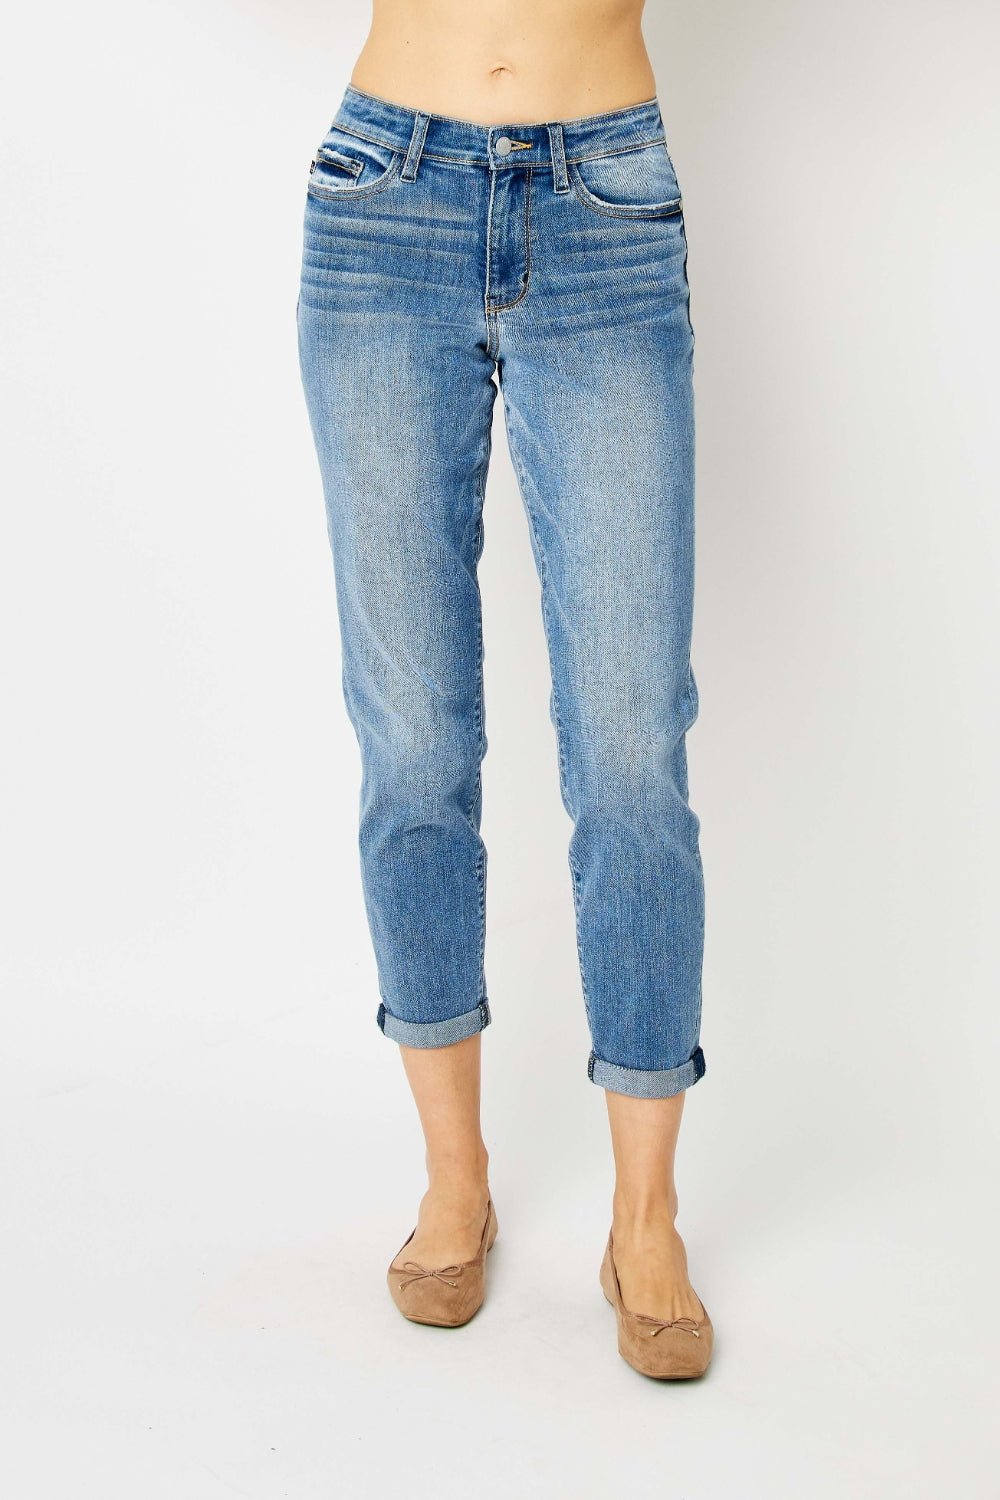 Judy Blue Full Size Cuffed Hem Slim Jeans - My Threaded Apparel | Online Women's Boutique - denim jeans